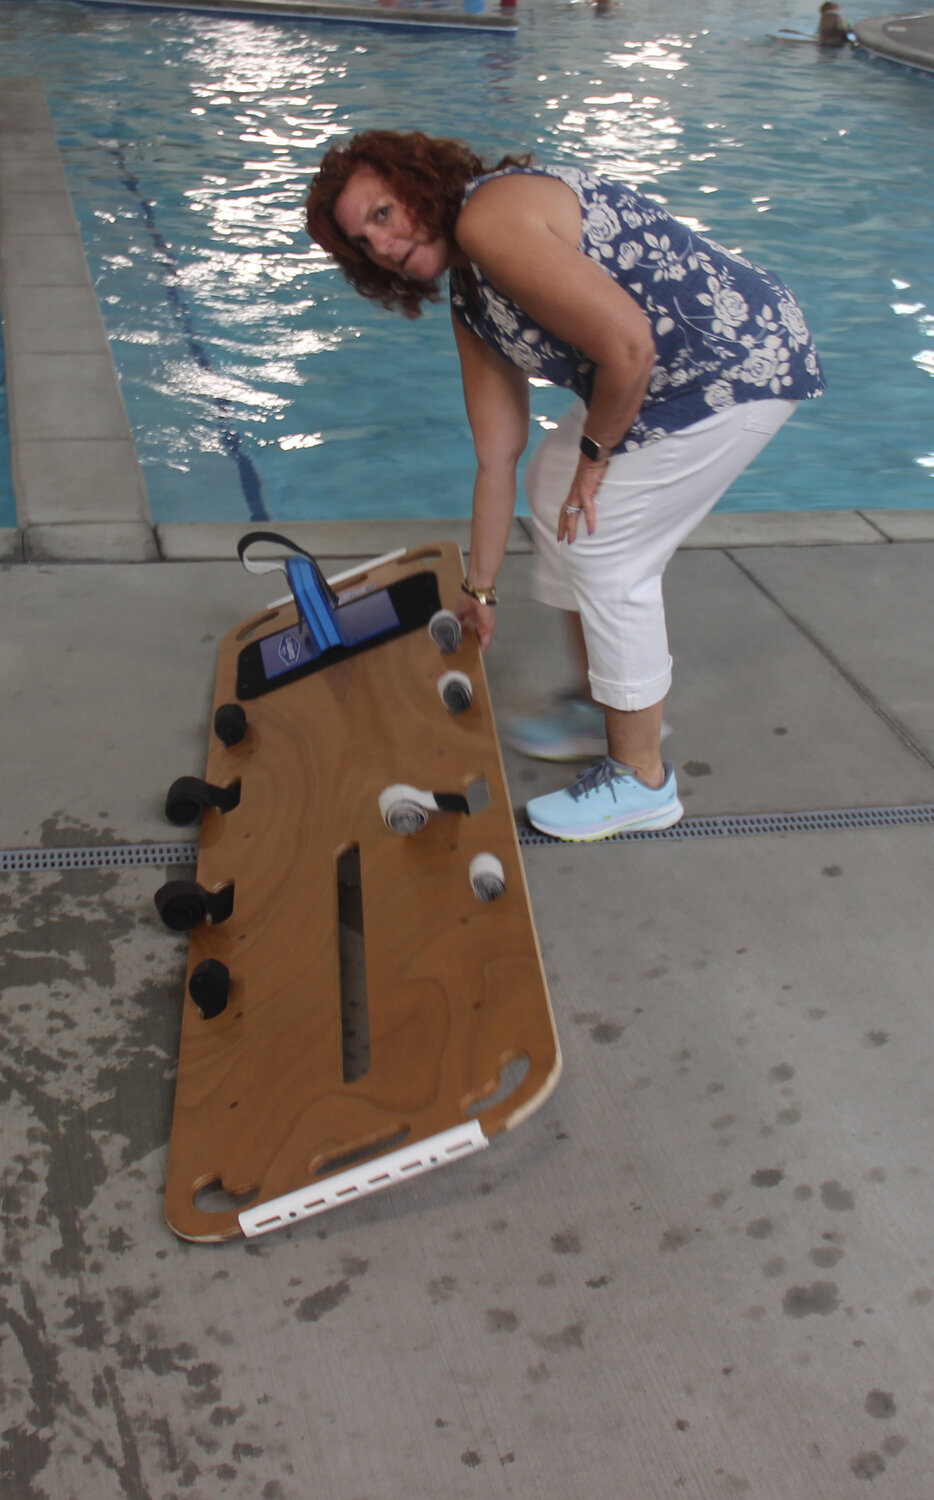 Lisa Kramer aquatics director, brings the backboard to the pool for the lifeguard training.